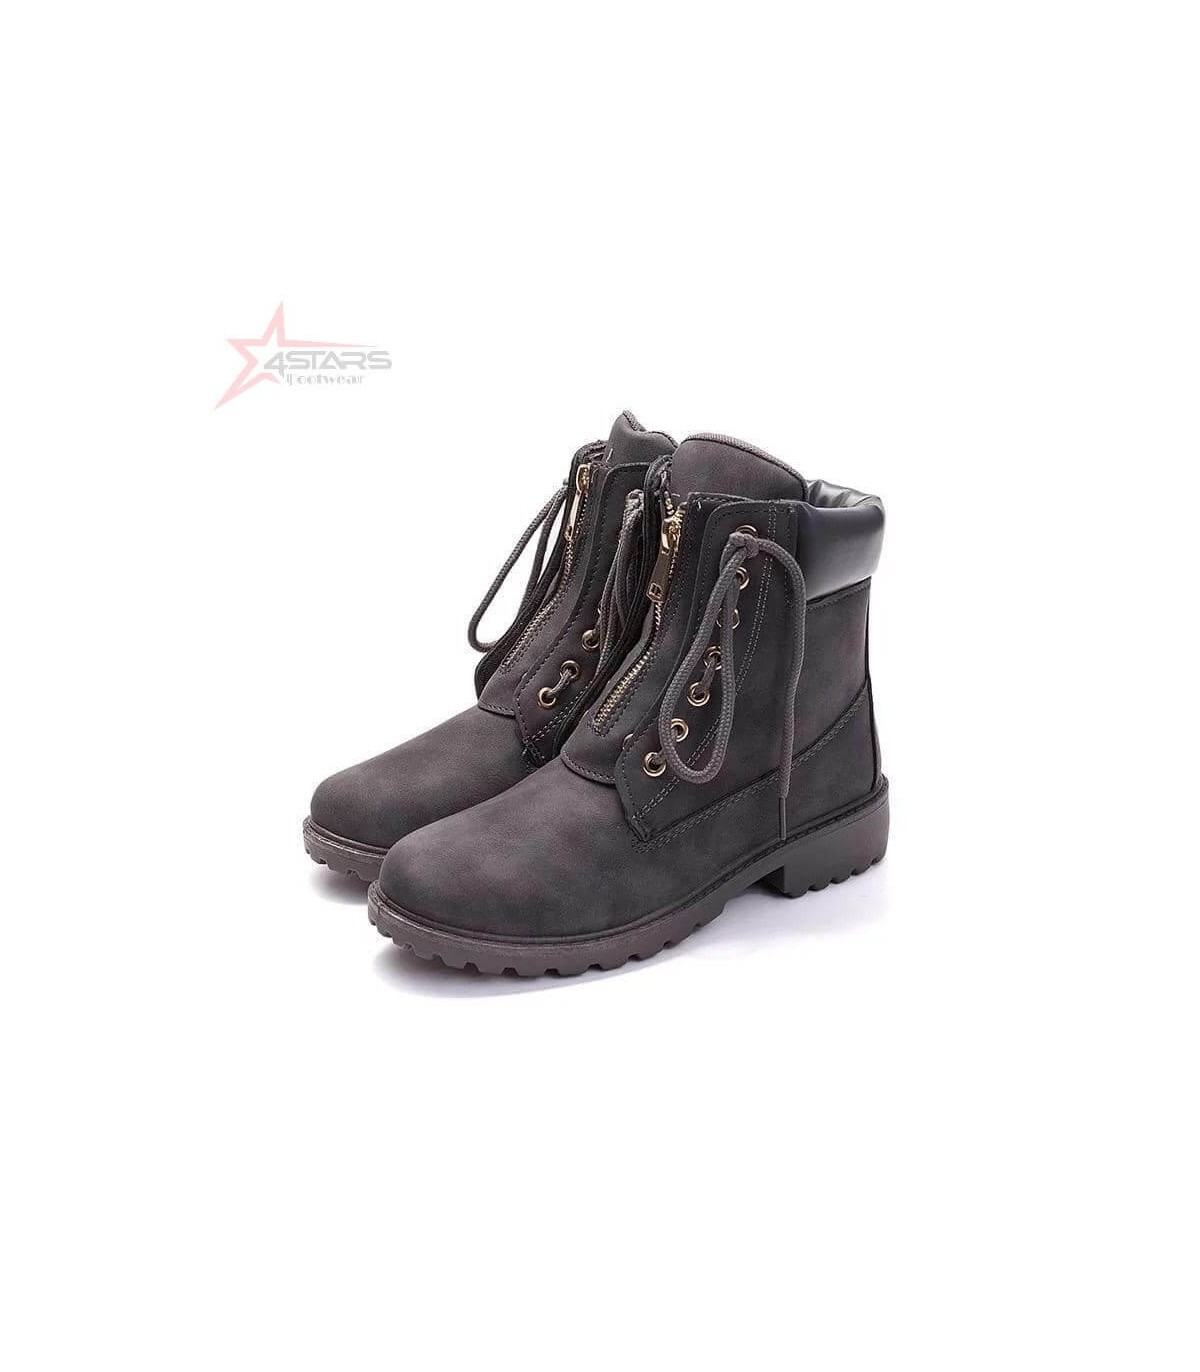 Ladies Timberland Boots - Grey/Black